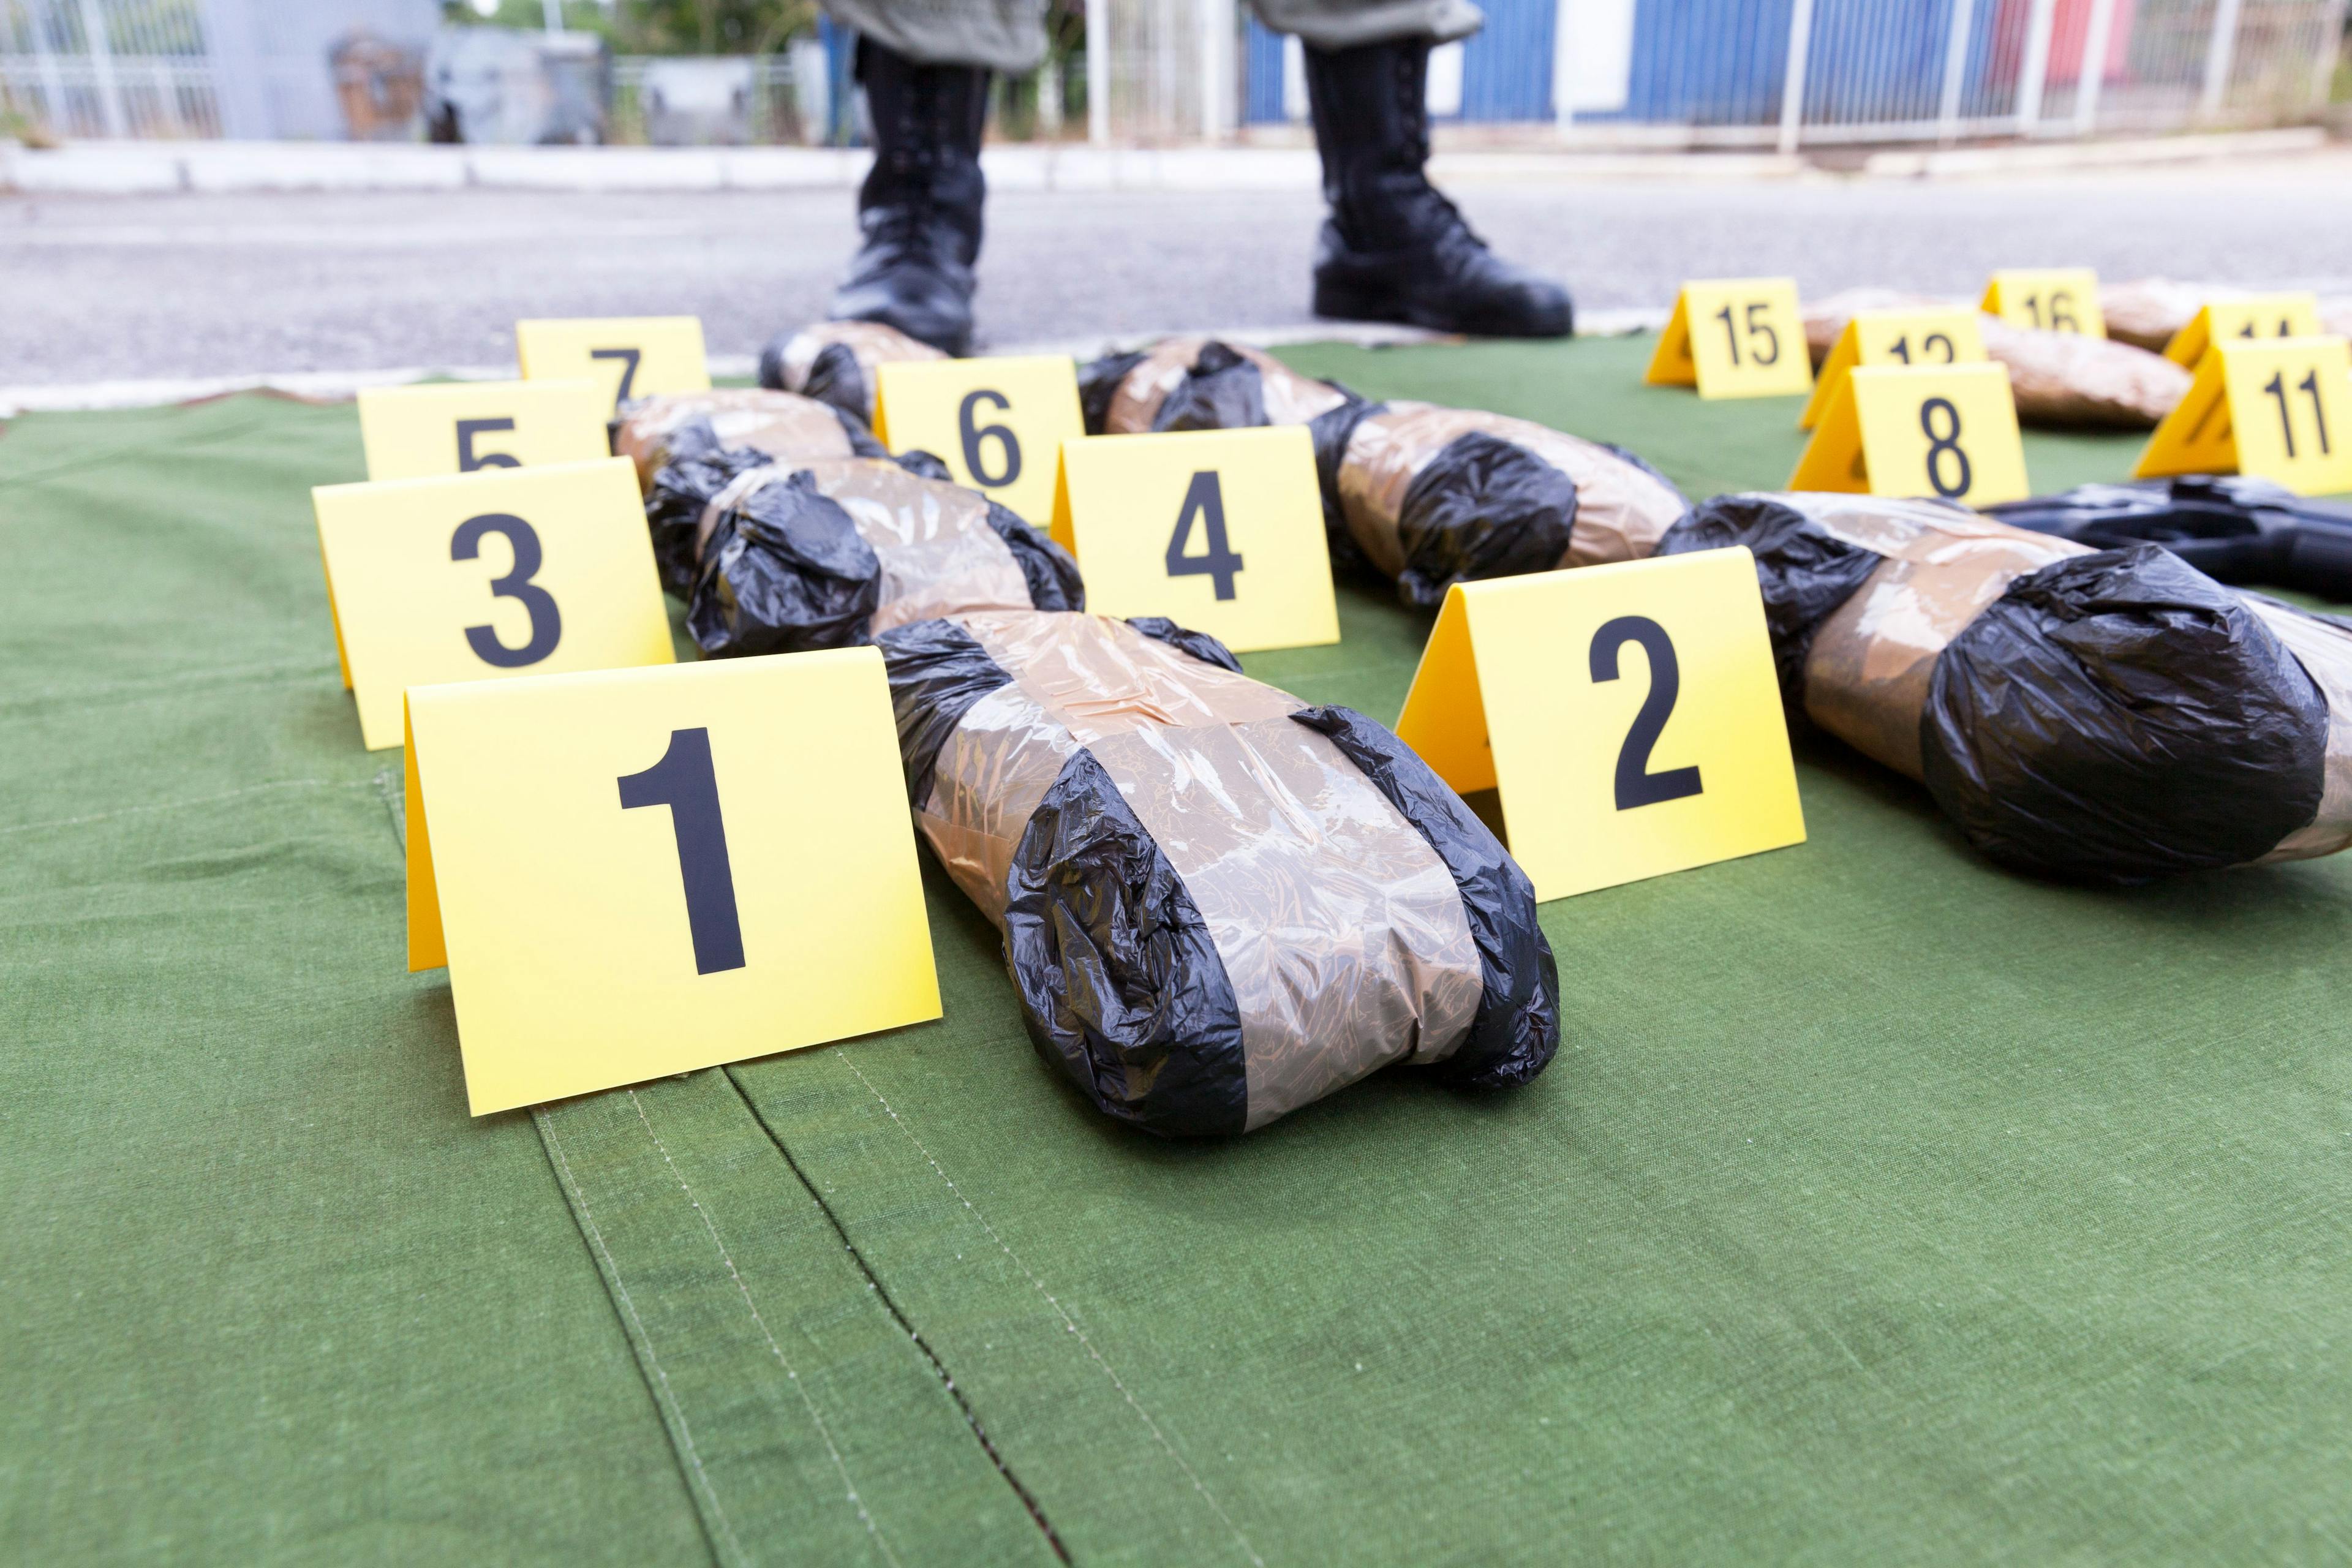 Drug evidence seized during the police raid | Image Credit: © wellphoto - stock.adobe.com